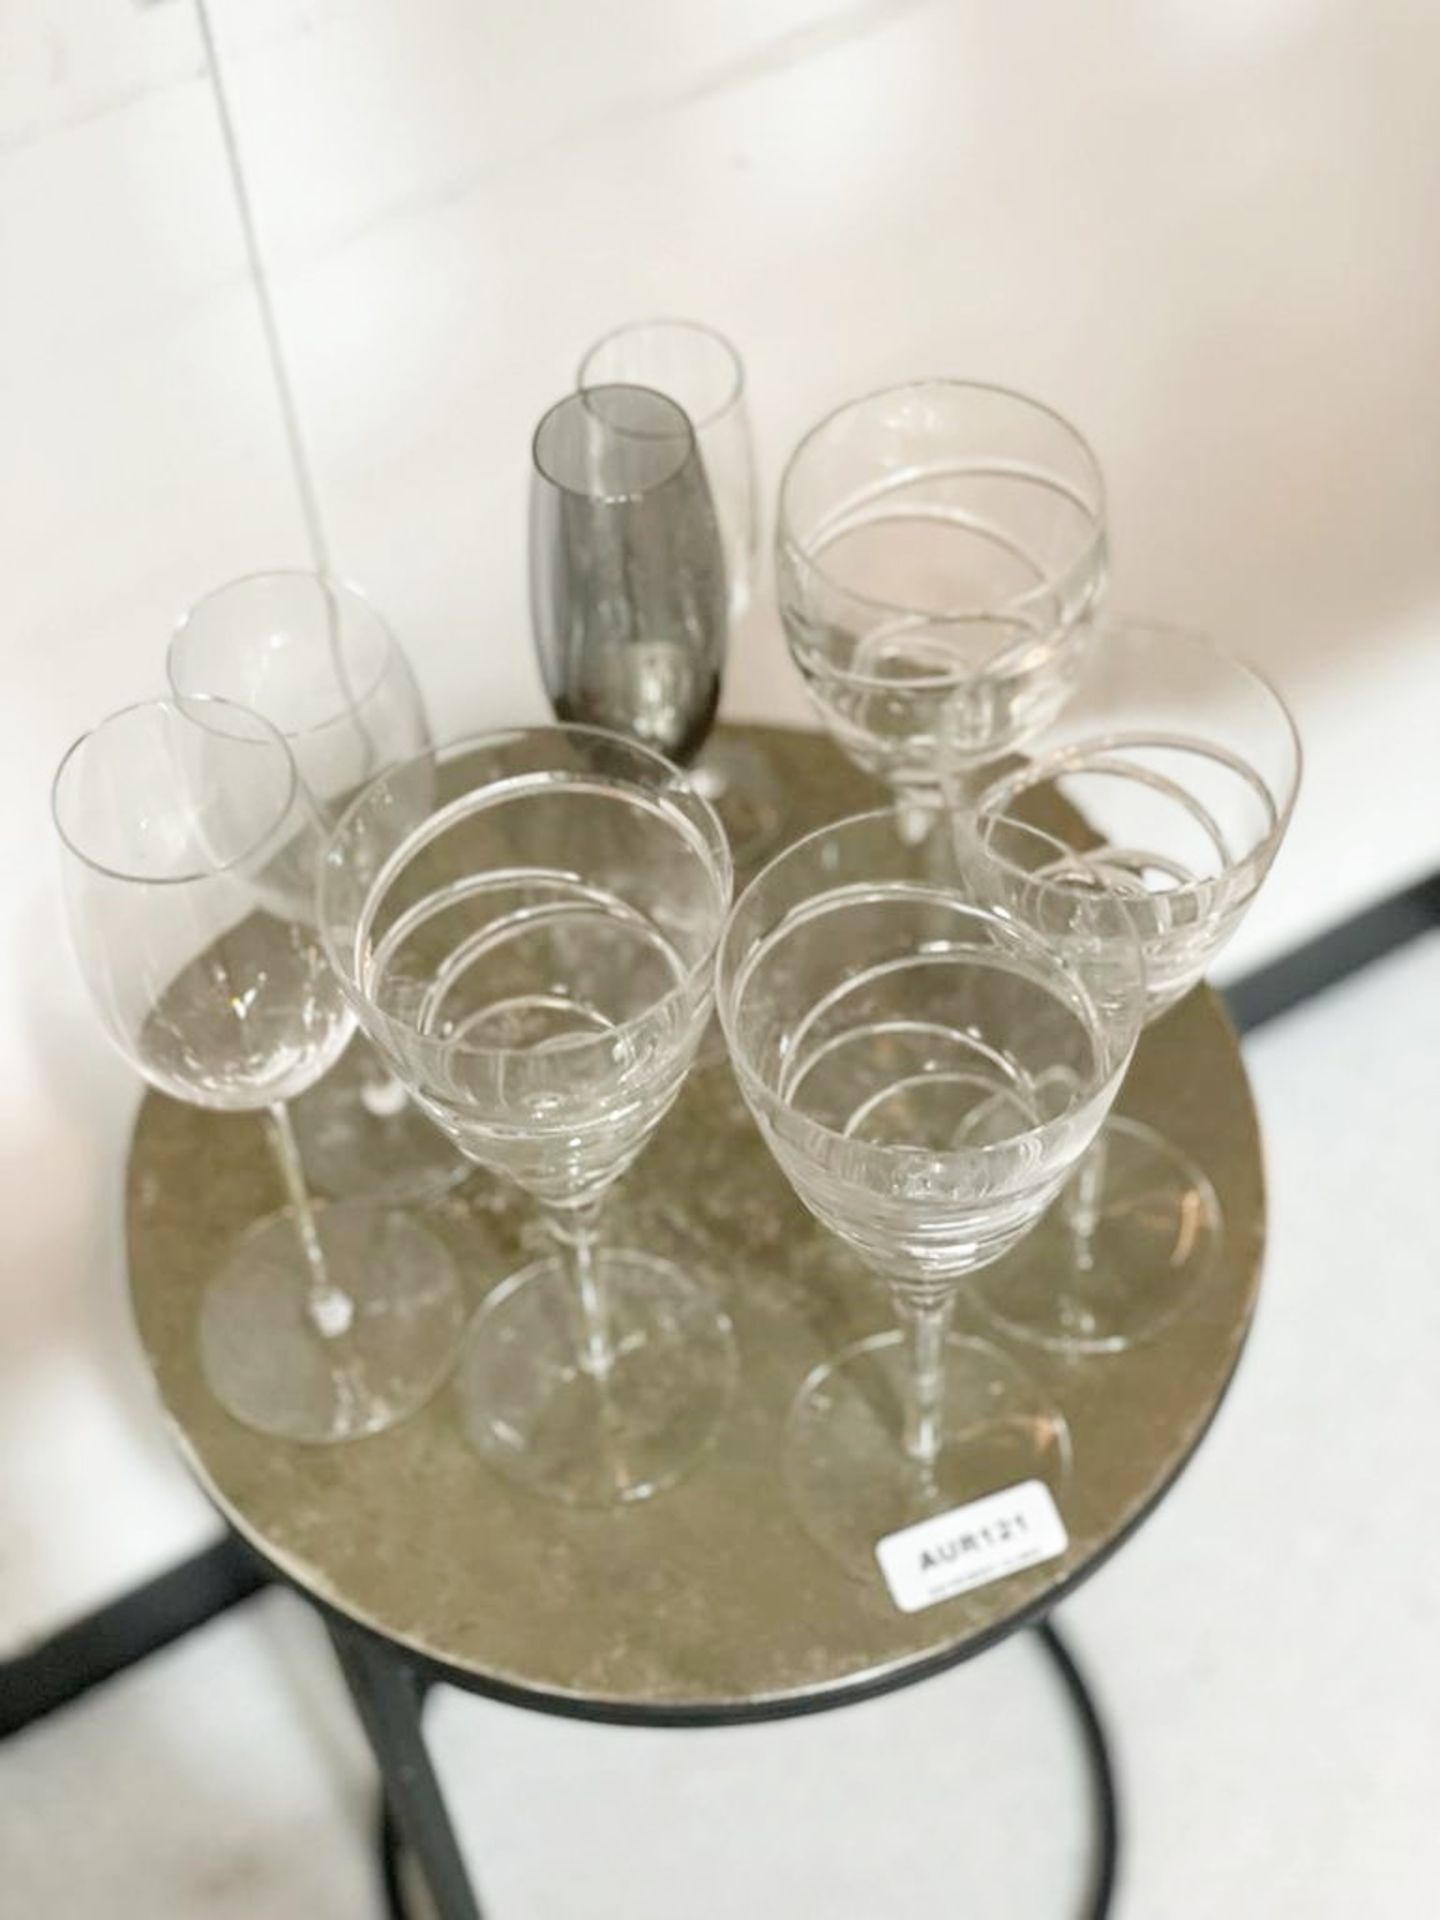 1 x  Collection Of Glassware Including One Jasper Conrad Wine Glass  - Ref: AUR121 - CL652 - - Image 3 of 3